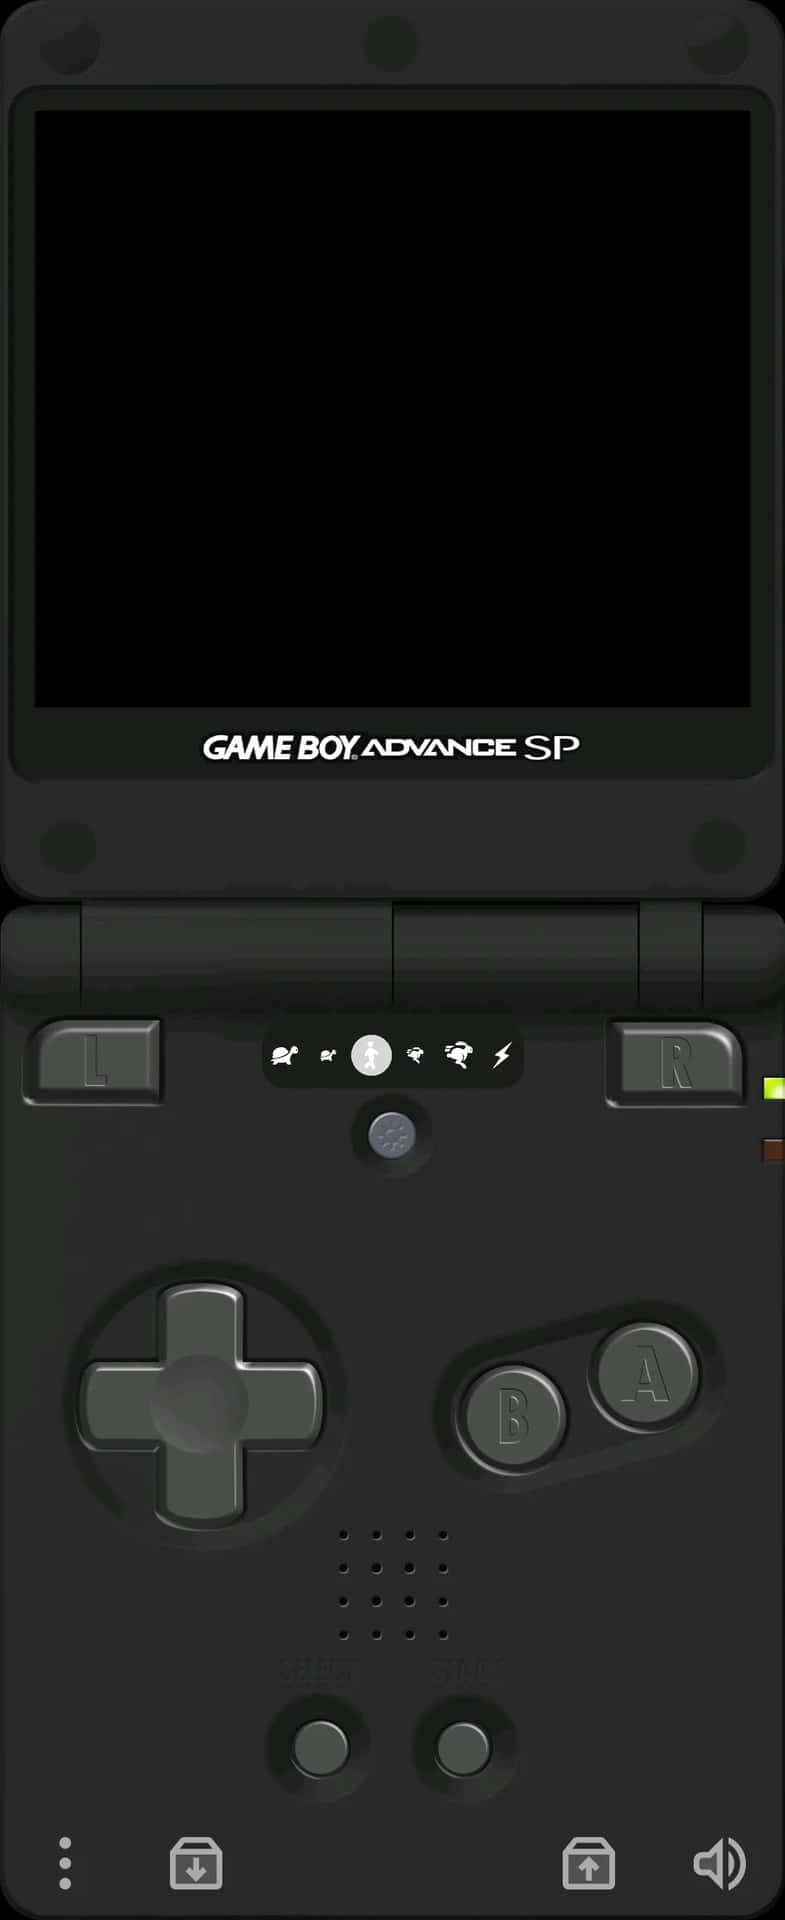 Gameboy Advance S Pi Phone Case Wallpaper